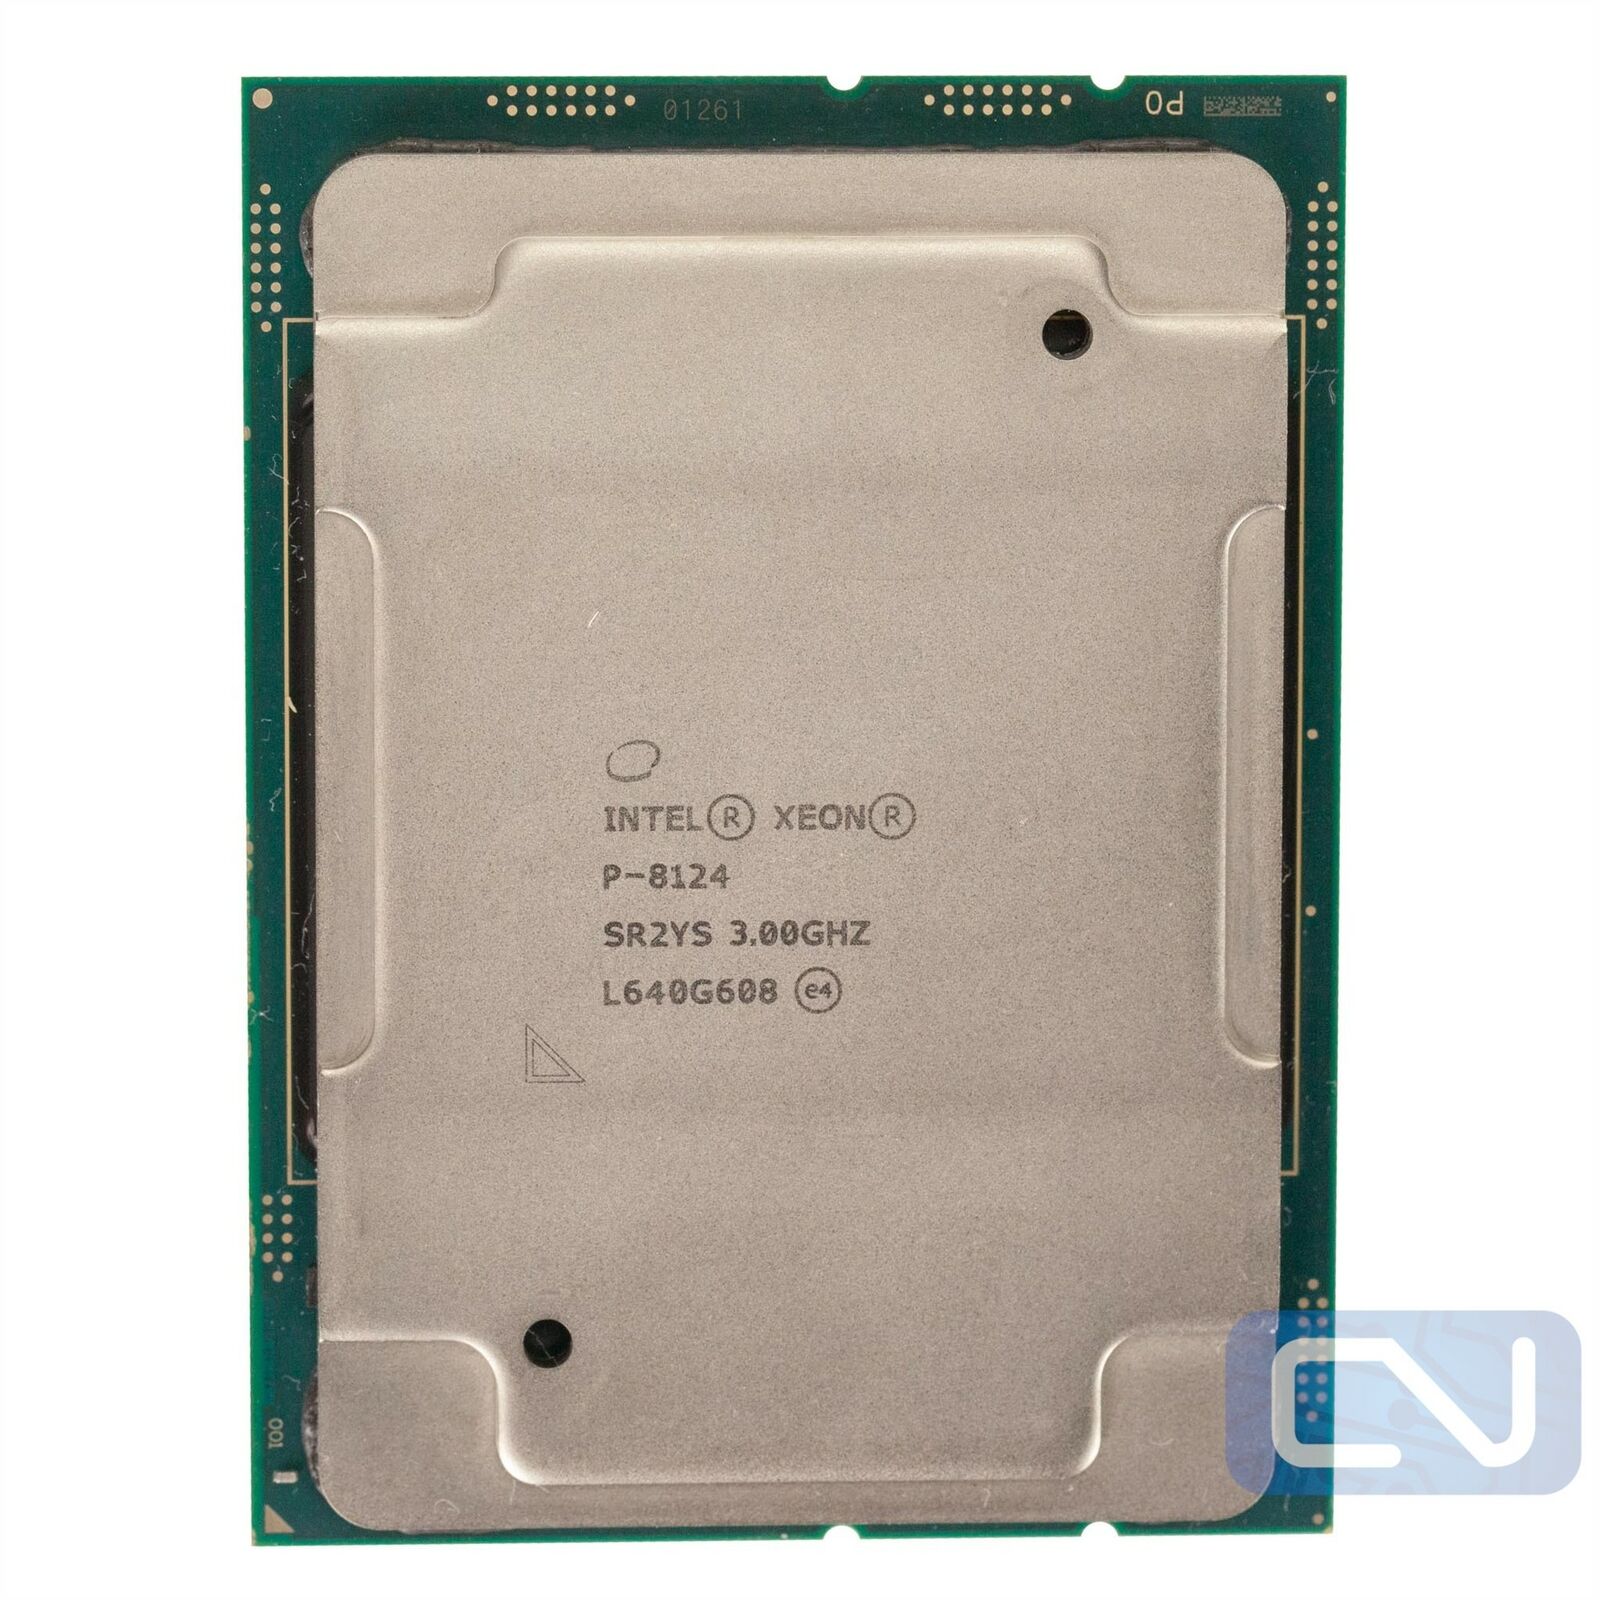 18 Core 3GHz Intel Xeon Platinum P-8124 SR2YS 3GHz 24.75 MB LGA 3647 B Grade CPU